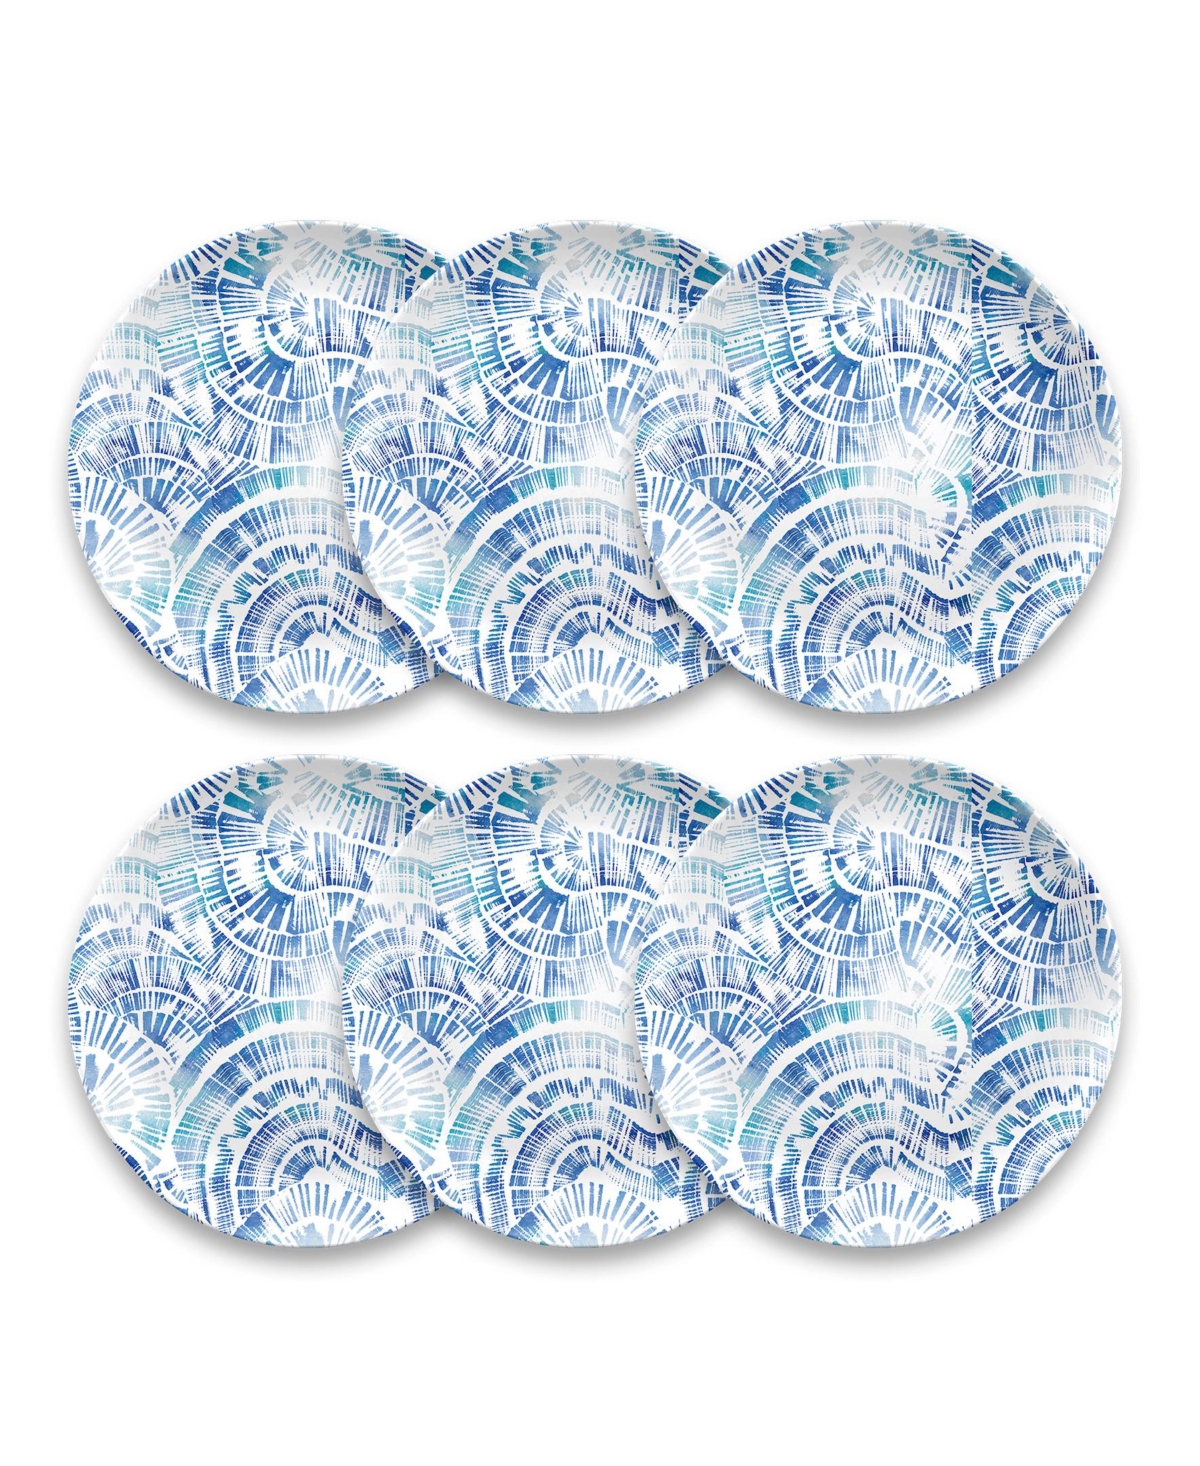 Melamine Coastal Scallops 6-Piece Dinner Plate Set, 10.5" - Coastal Blue, Teal, White